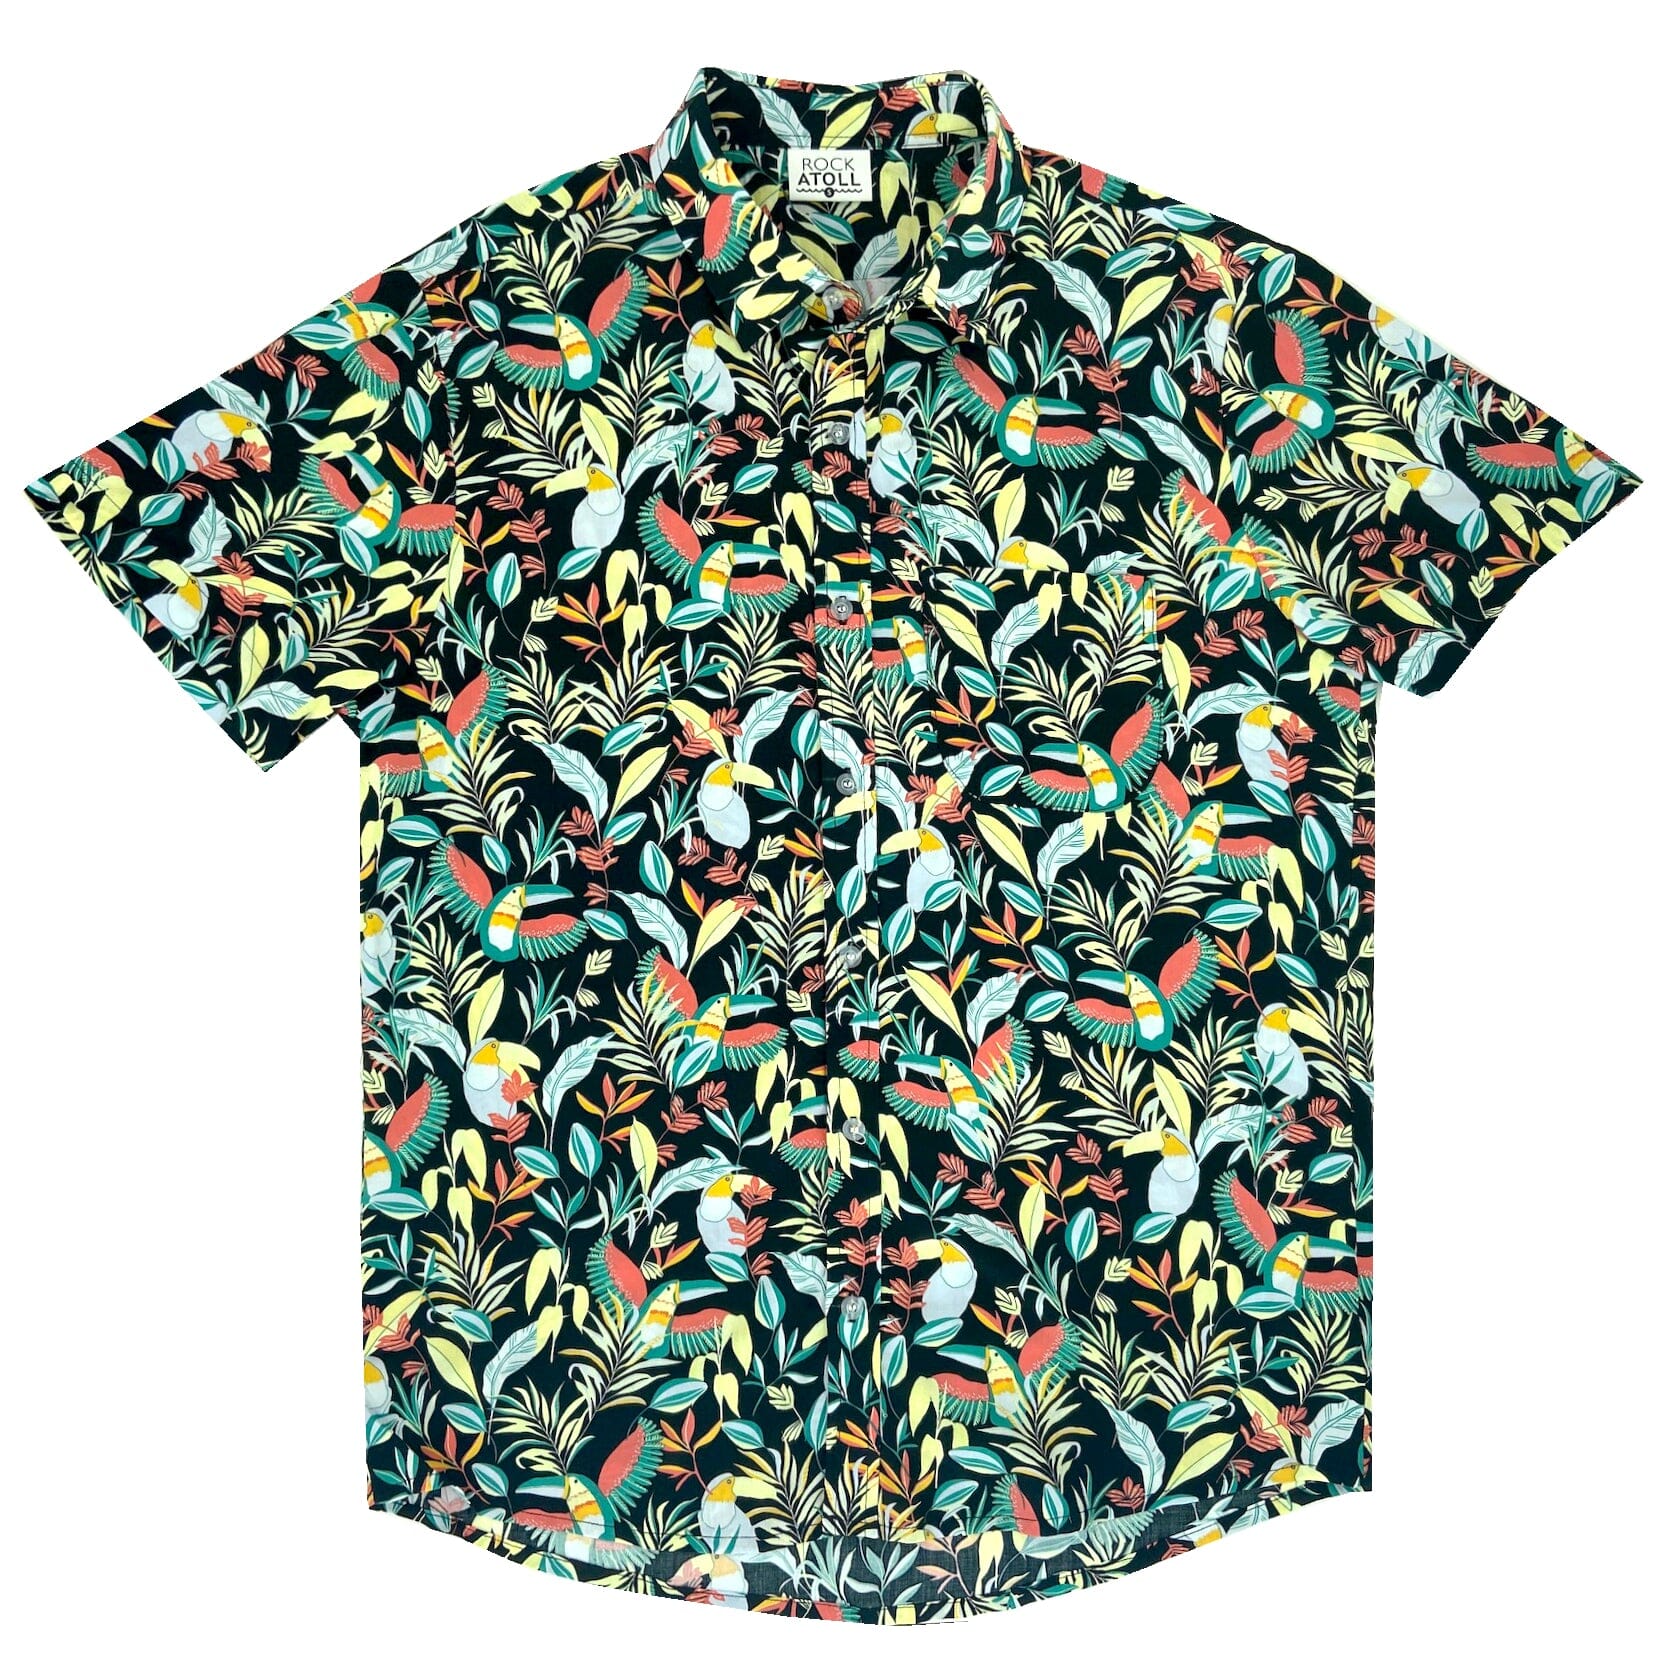 Men's Colorful Tropical Toucan Patterned Button Down Hawaiian Shirt